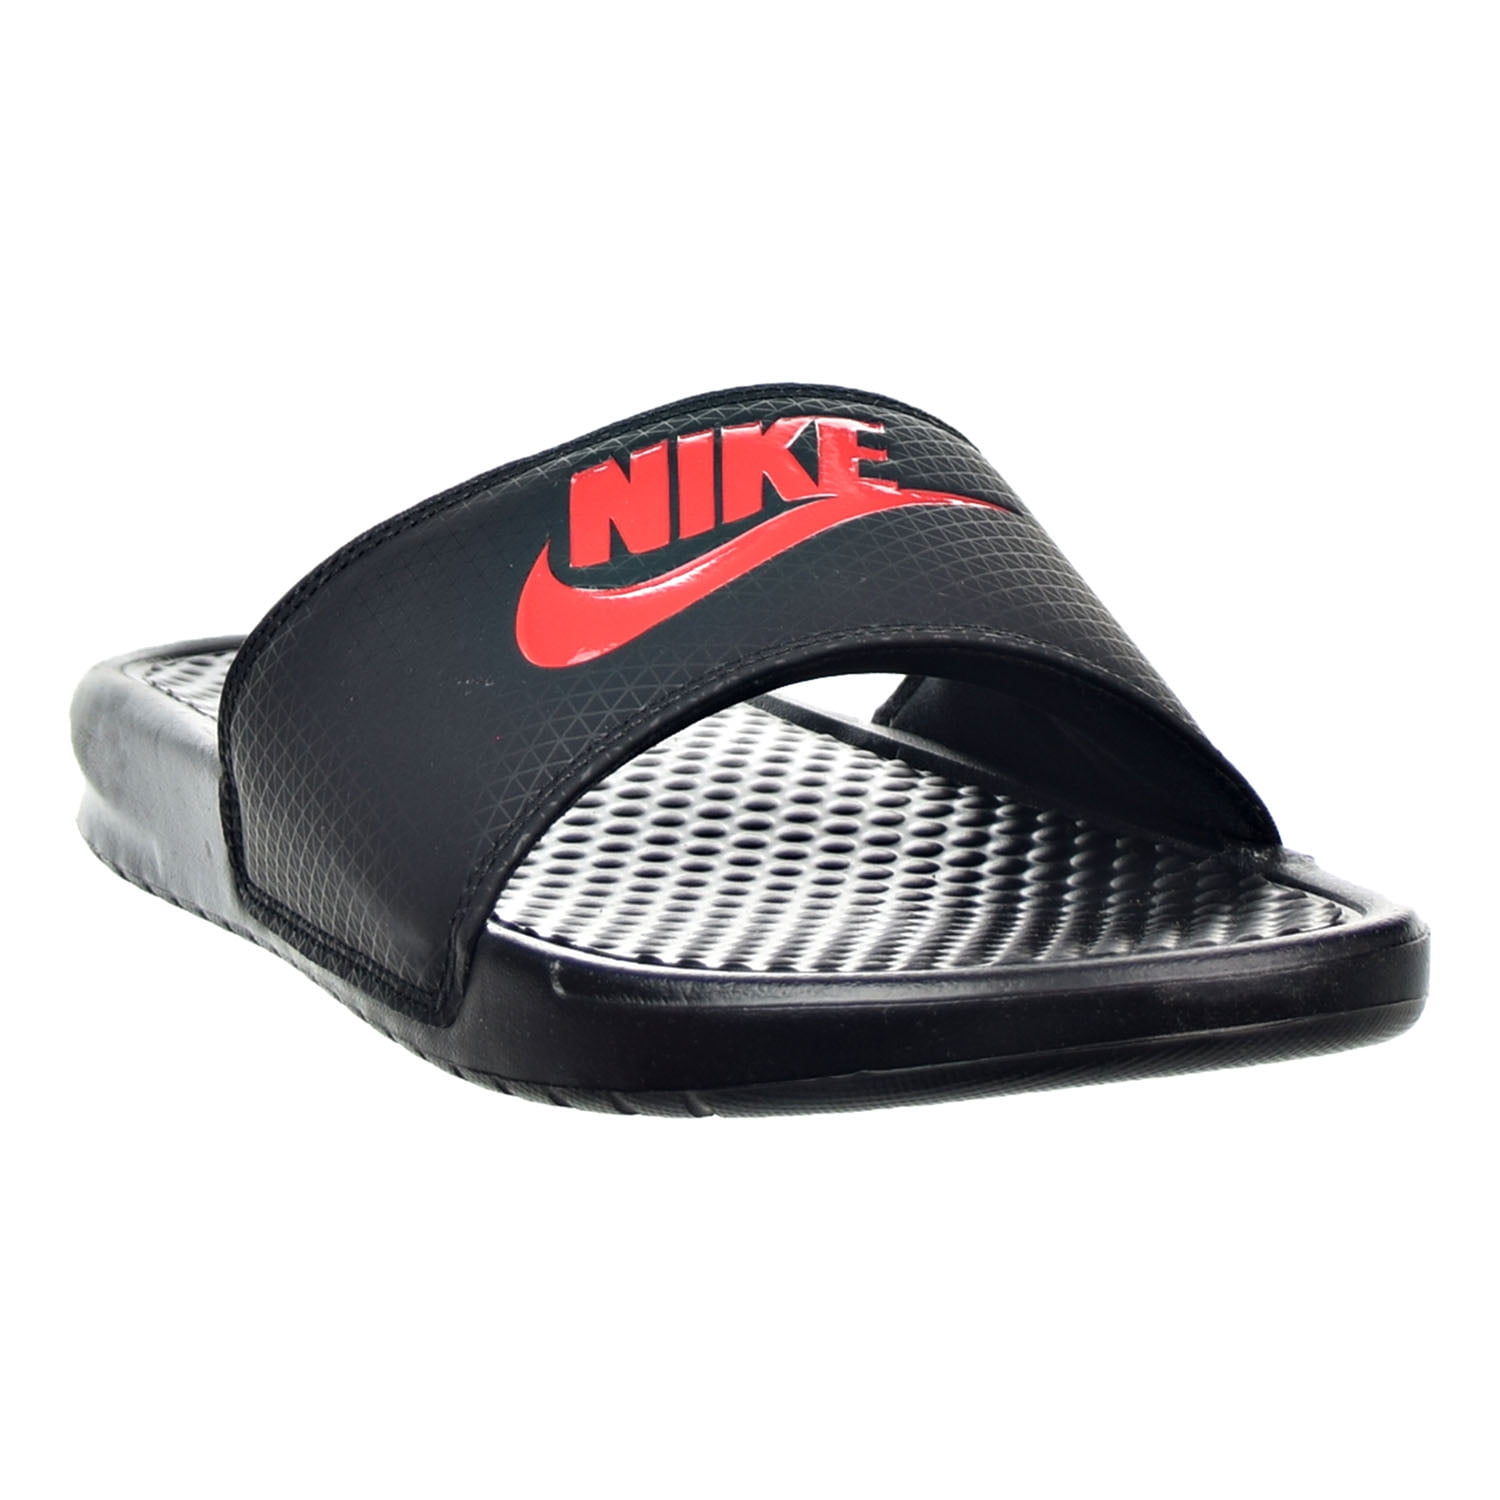 Asimilación Giotto Dibondon público Nike Benassi JDI Men's Sandals Black/Challenge Red 343880-060 - Walmart.com